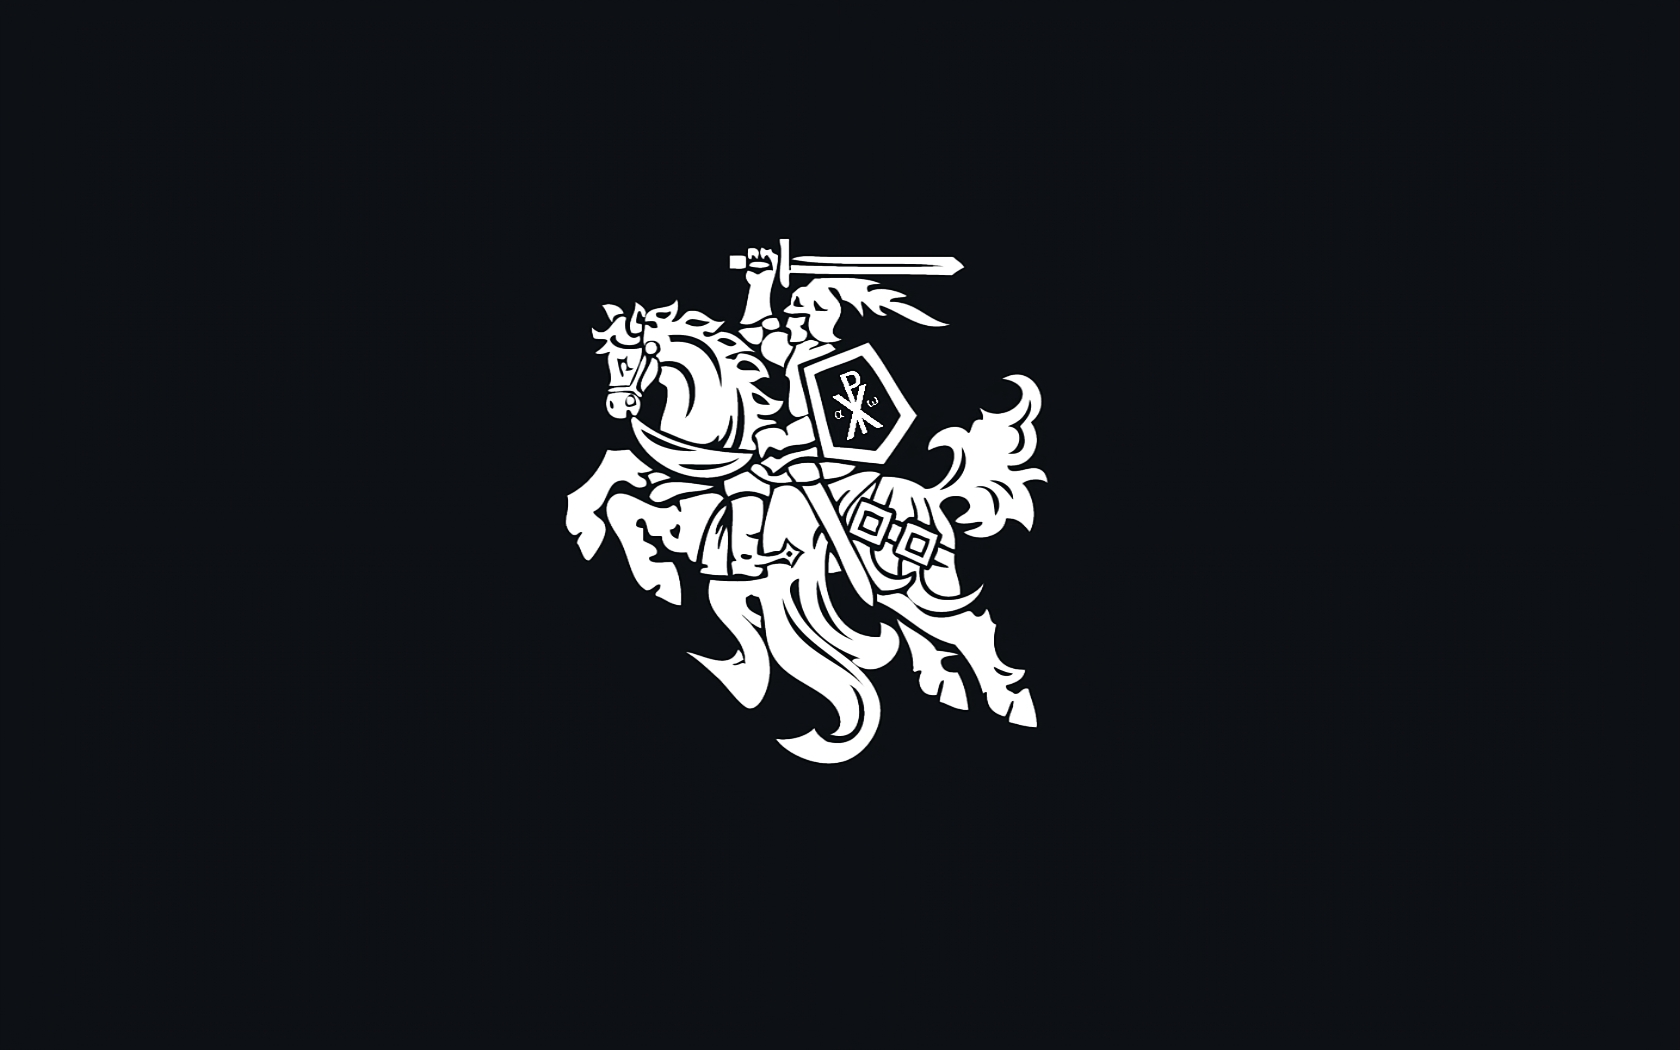 General 1680x1050 knight simple background Chi rho black background minimalism logo shield sword horse horseback alpha omega